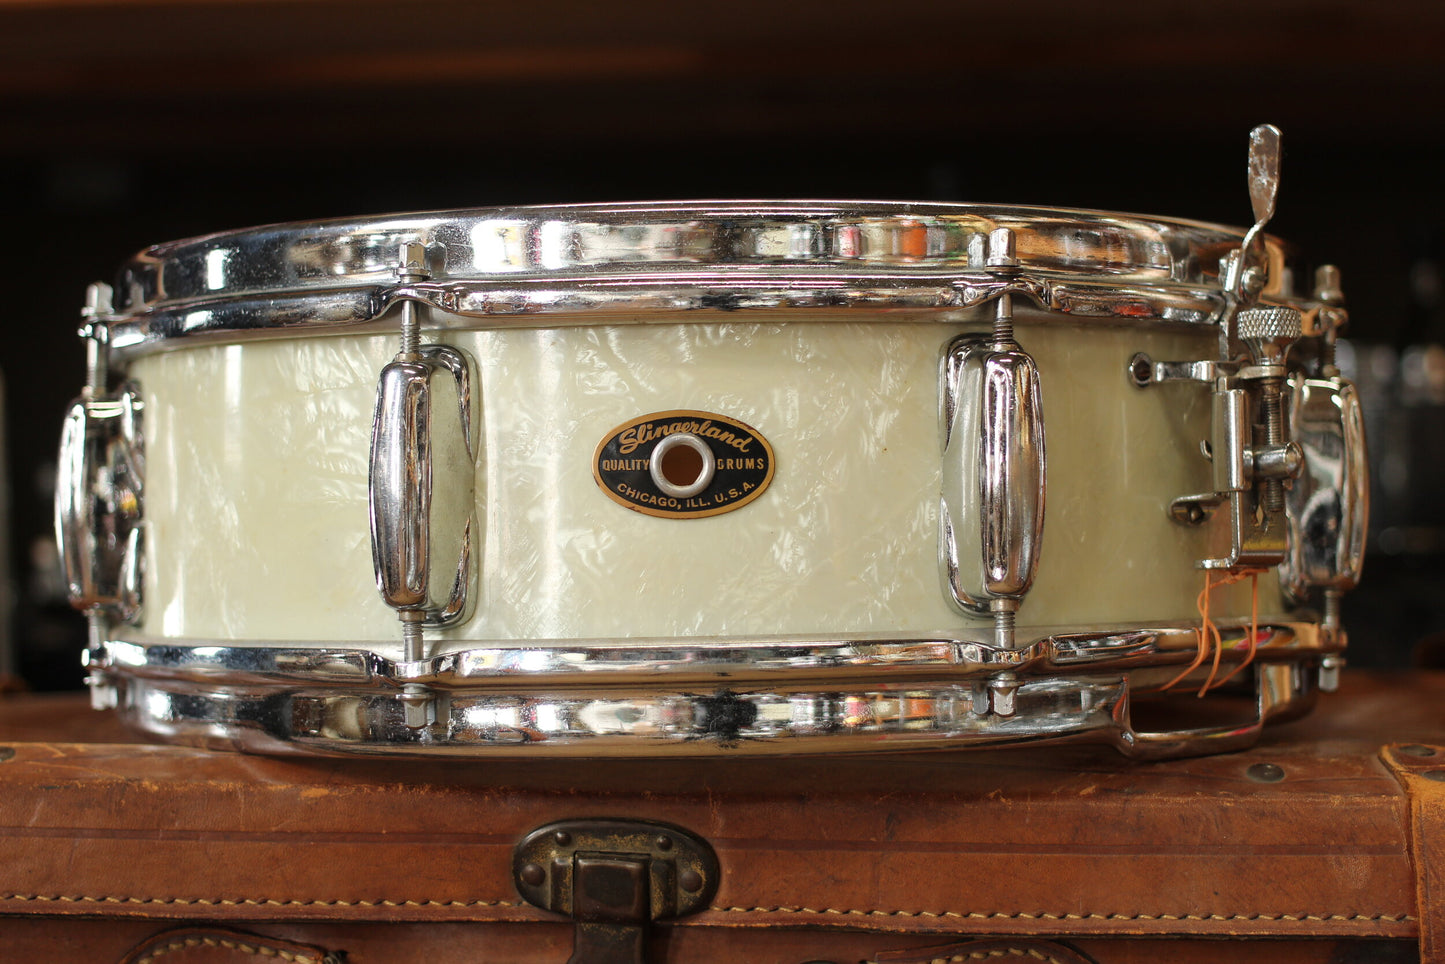 1950's Slingerland 4"x14" Snare Drum in White Marine Pearl